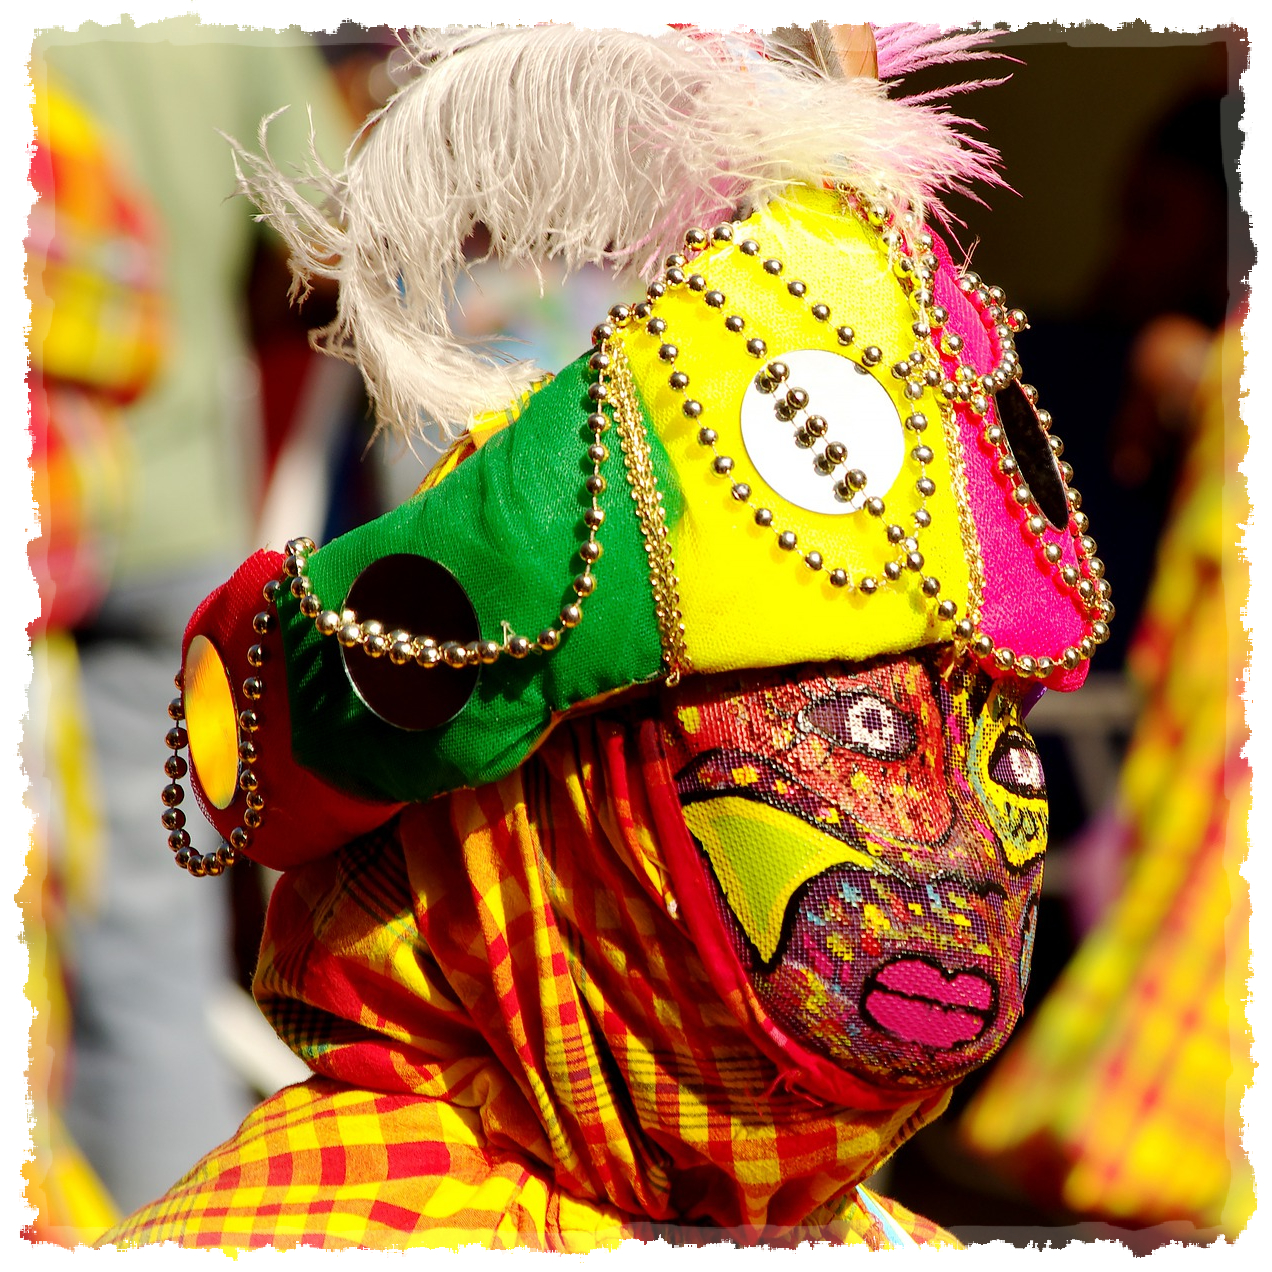 a masked Carnival goer